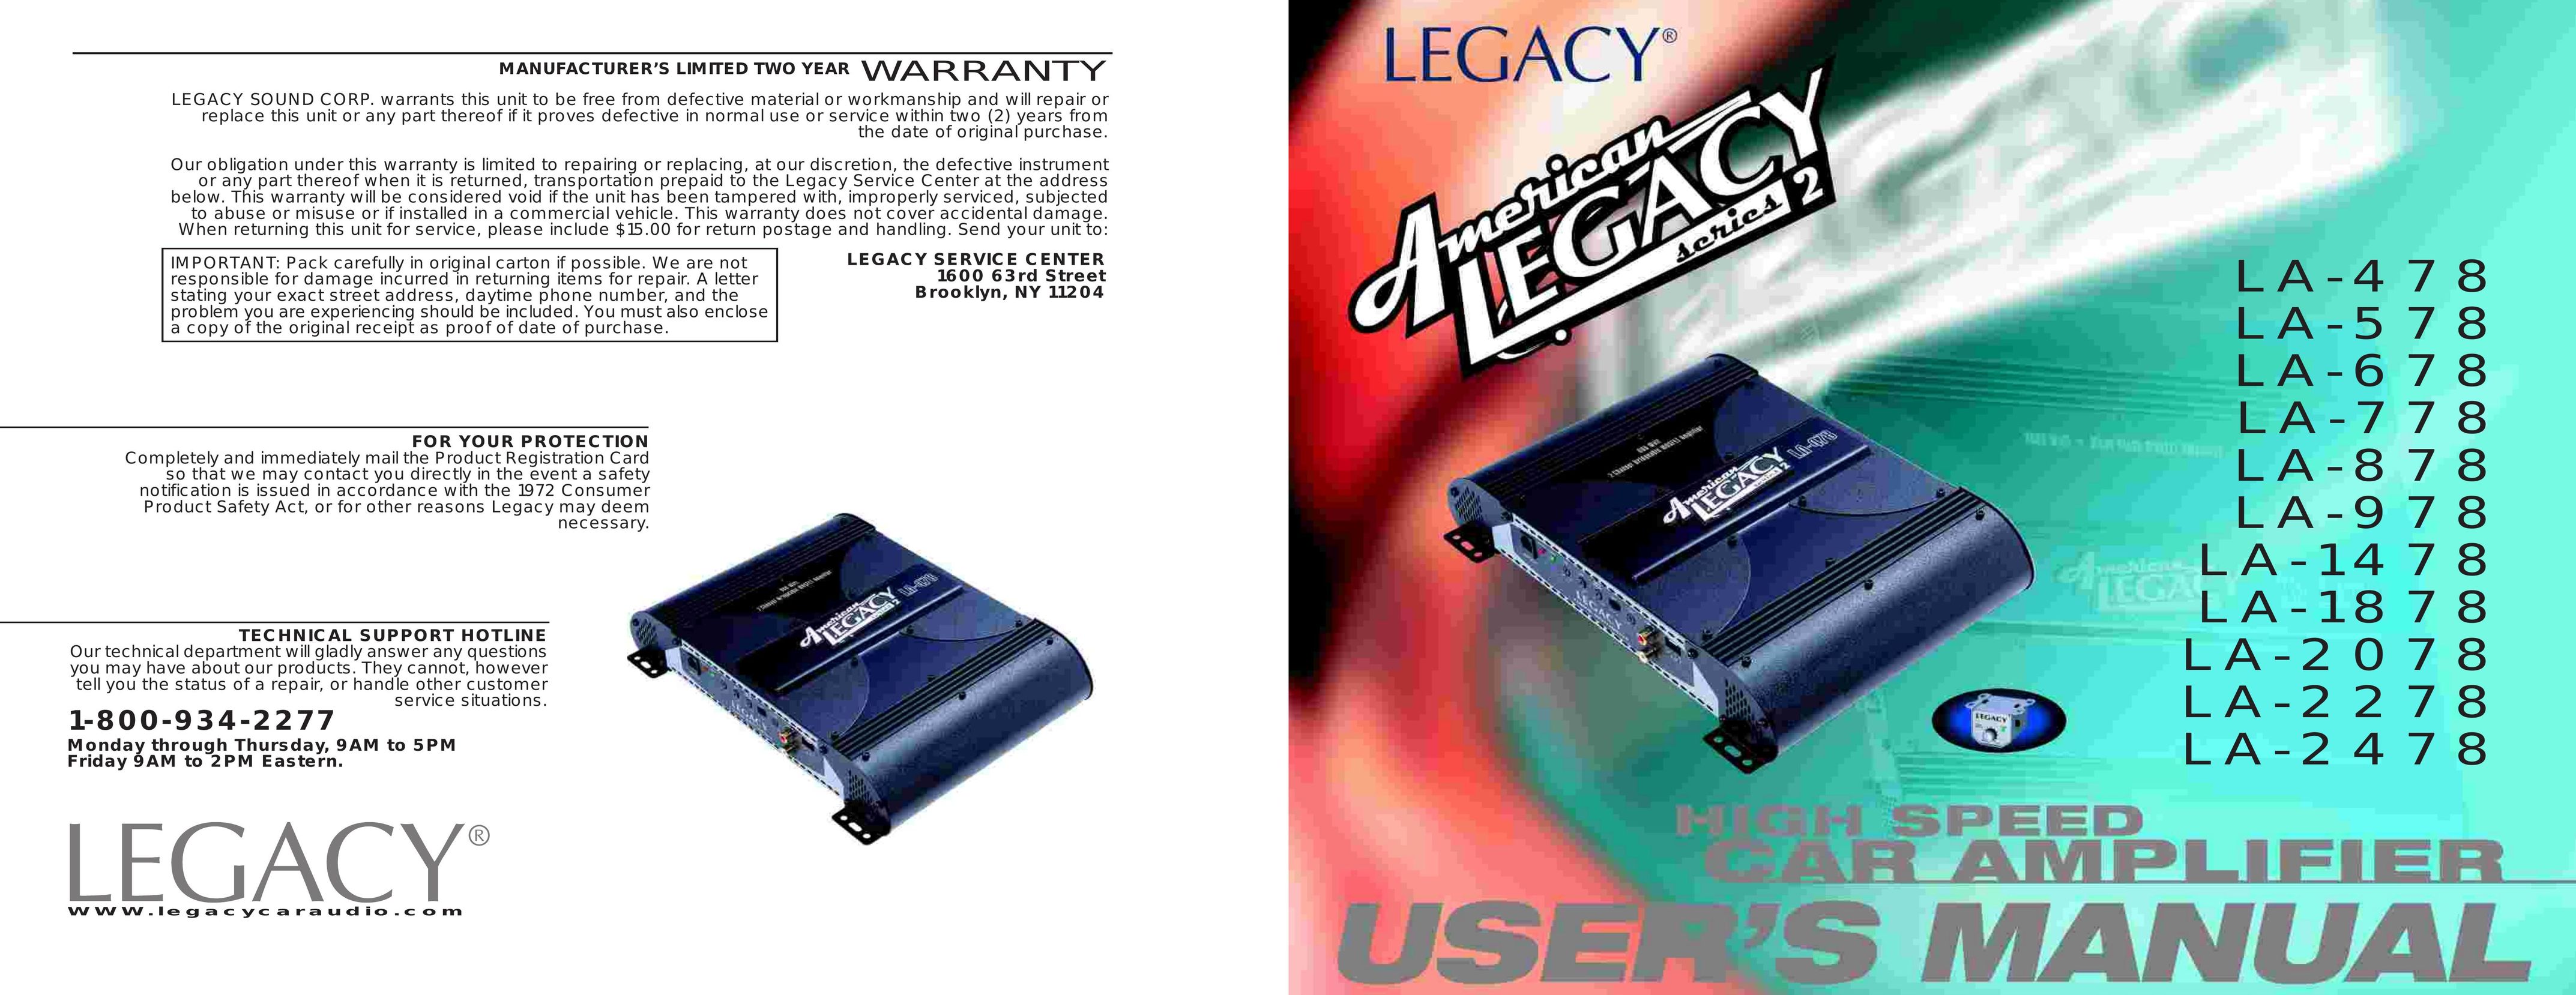 Legacy Car Audio LA-2278 Car Amplifier User Manual